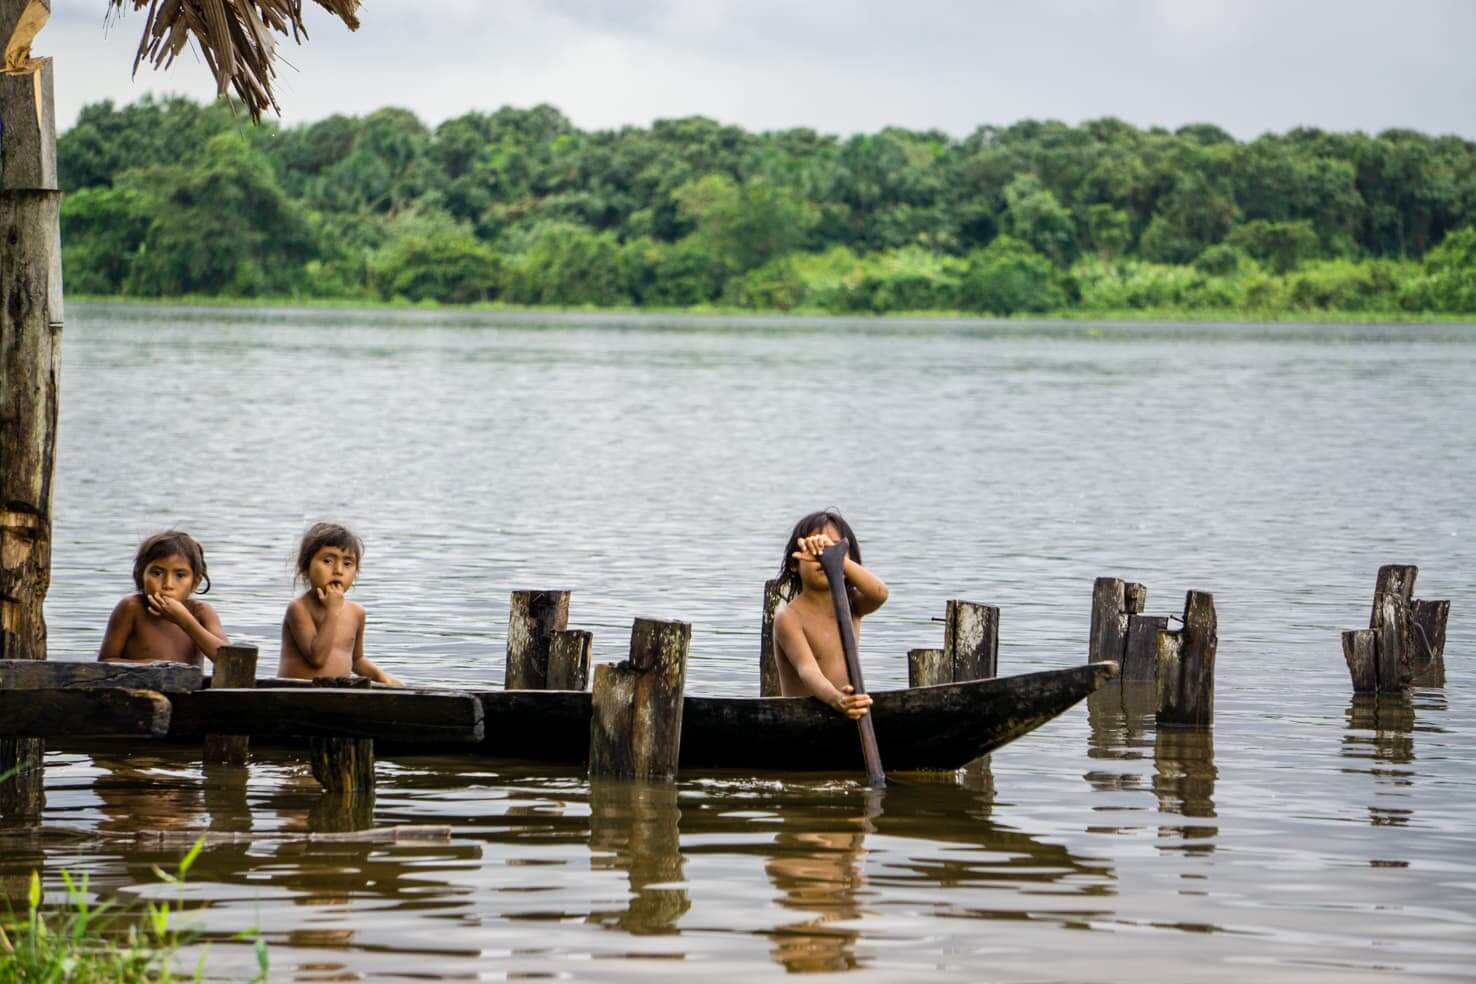 Daily life of Warao Indians in Venezuelan jungle